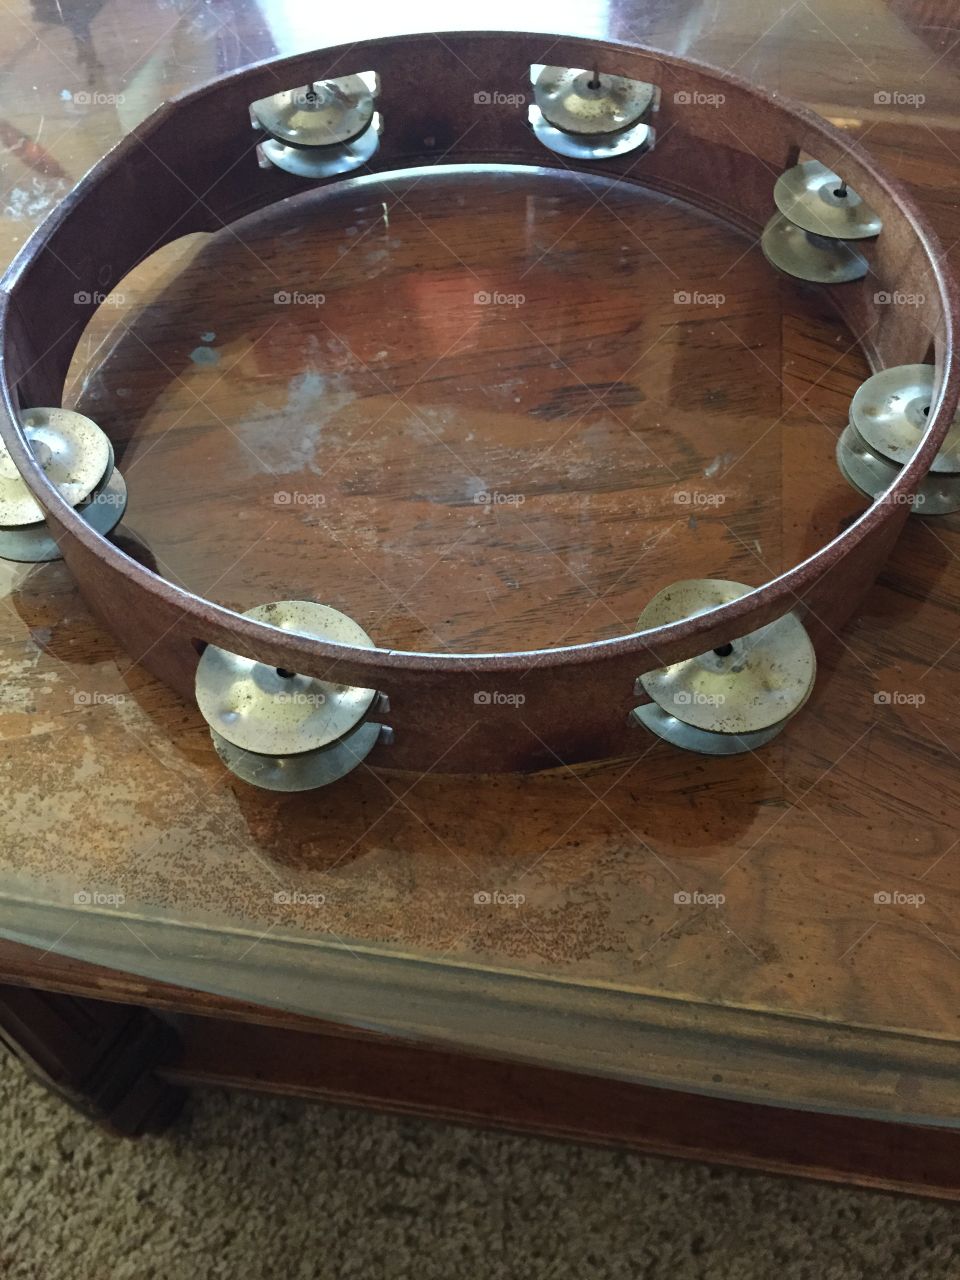 Tambourine on glass table. 